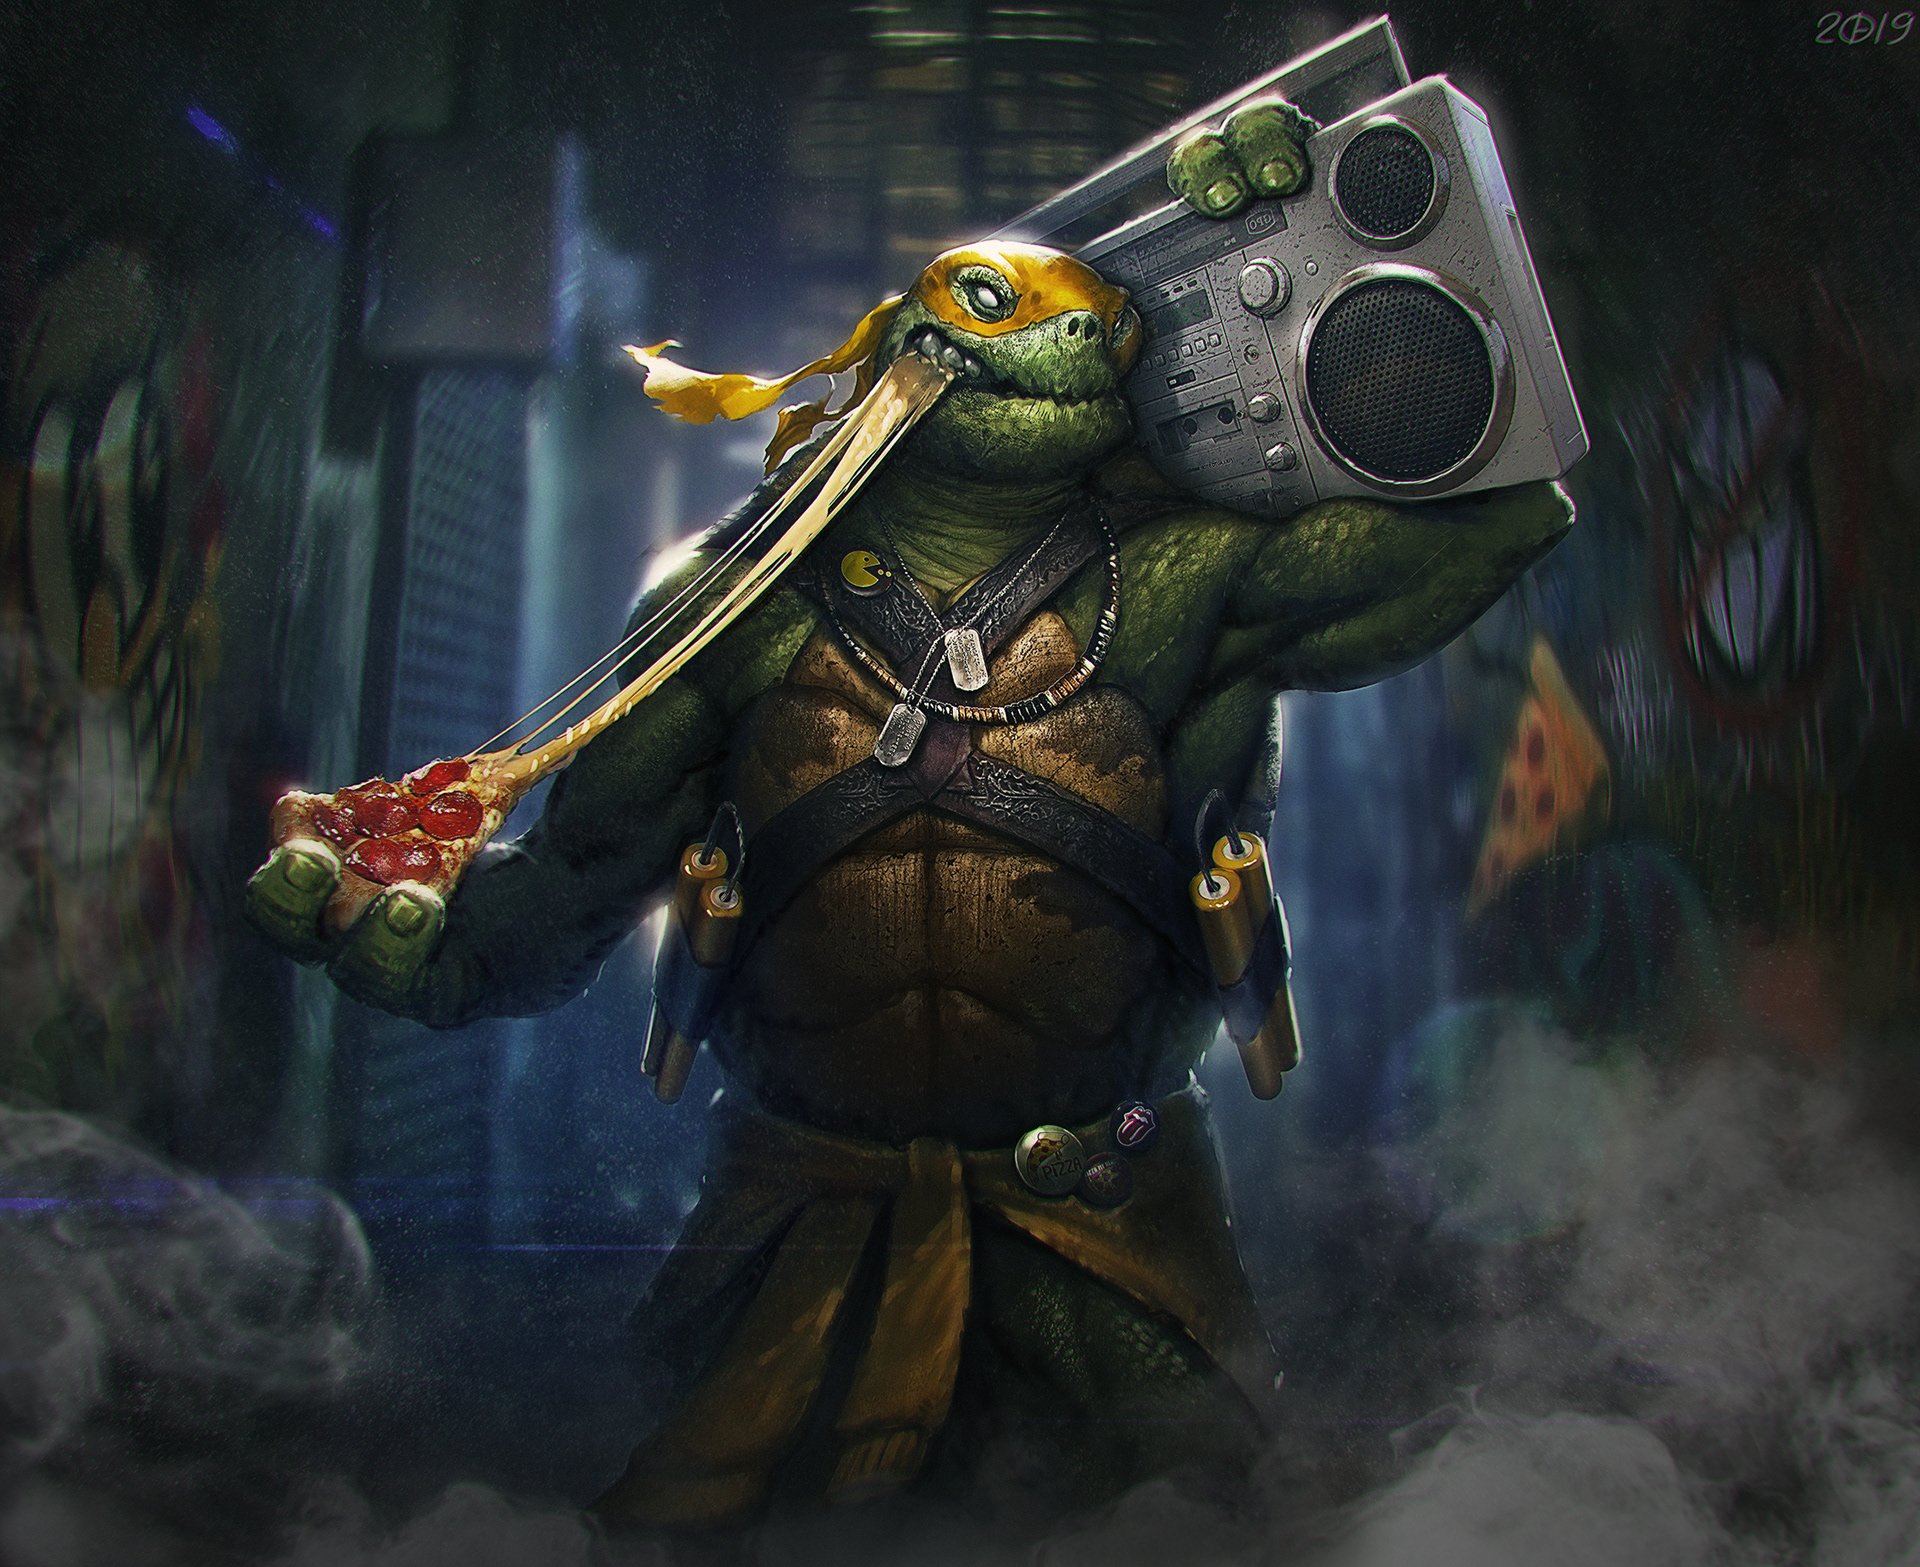 Michelangelo Ninja Turtle Background - HD Wallpaper 